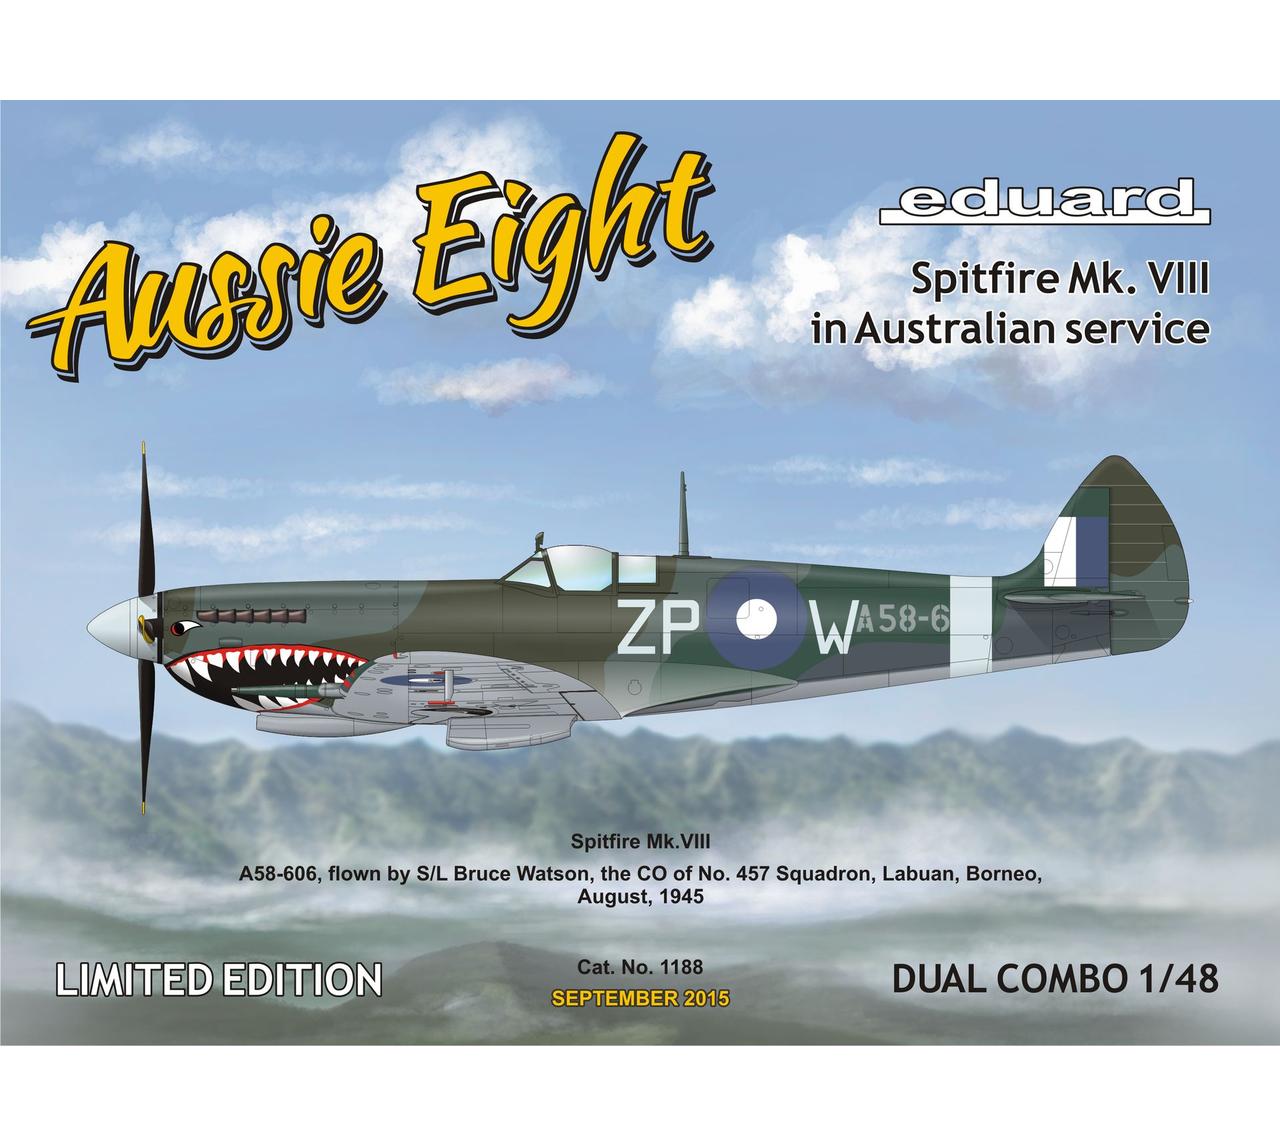 Eduard Spitfire-kavalkad, Aussie Eight #1 klar, Aussie Eight #2 NY!, Bonus: Airfix Spitfire XII - Sida 12 10